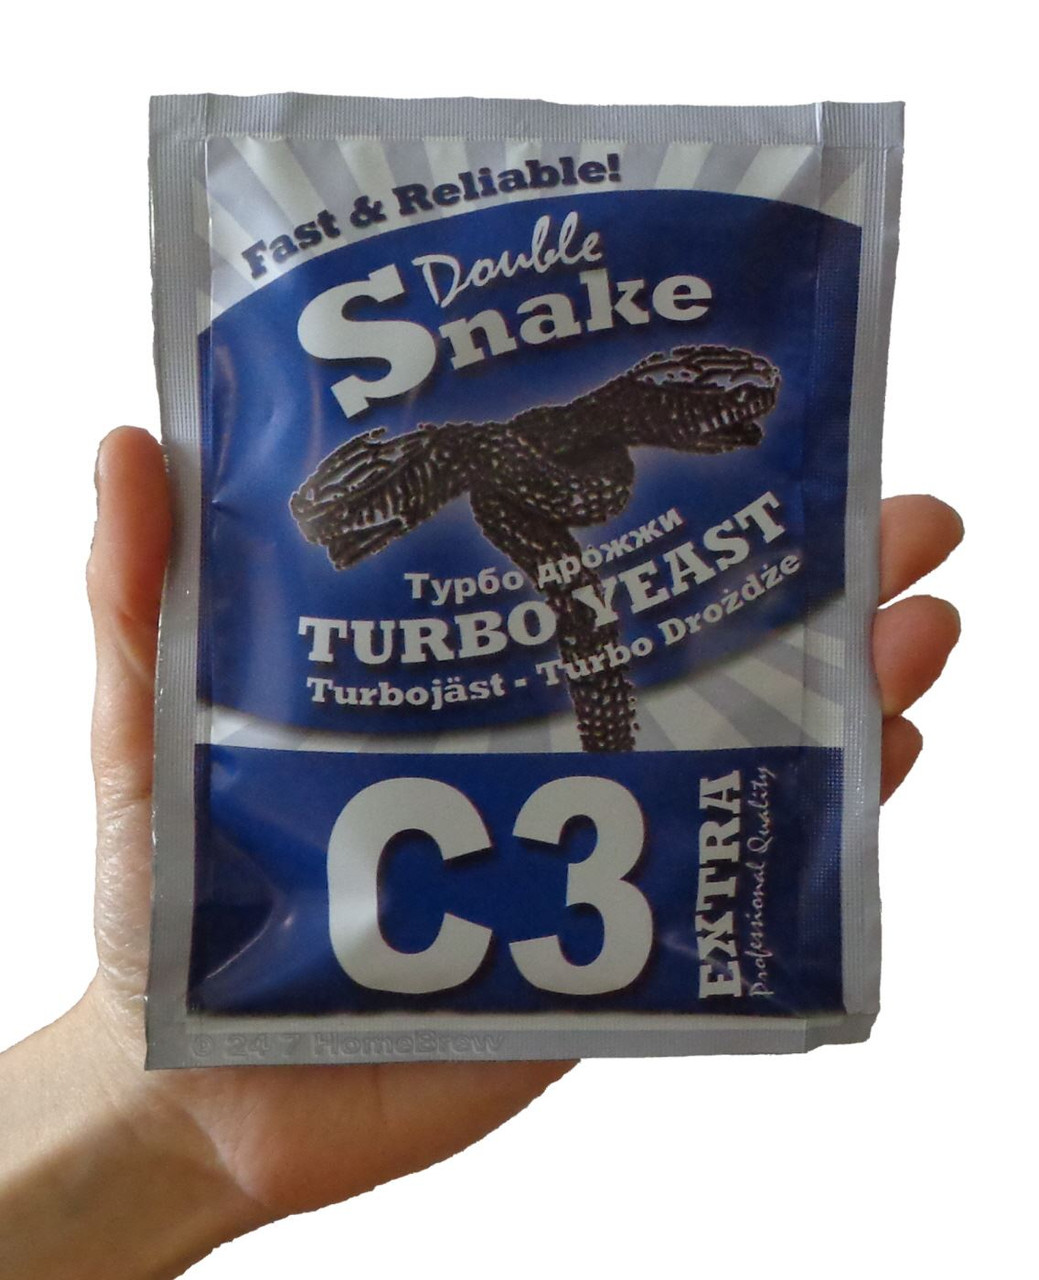 Double Snake C3 Turbo Yeast, TurboKlar, Liquid Carbon